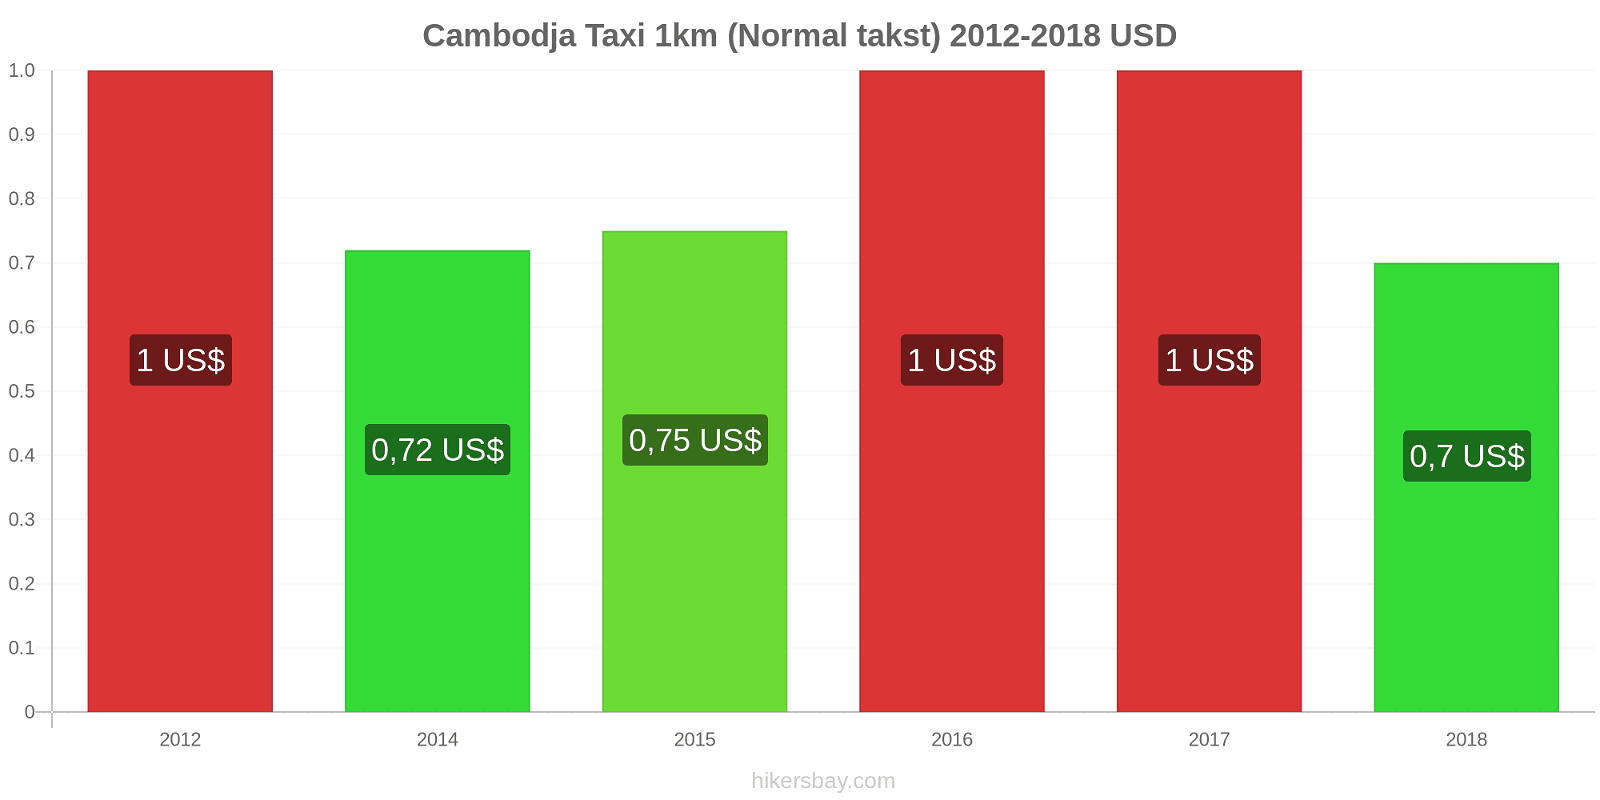 Cambodja prisændringer Taxi 1km (normal takst) hikersbay.com